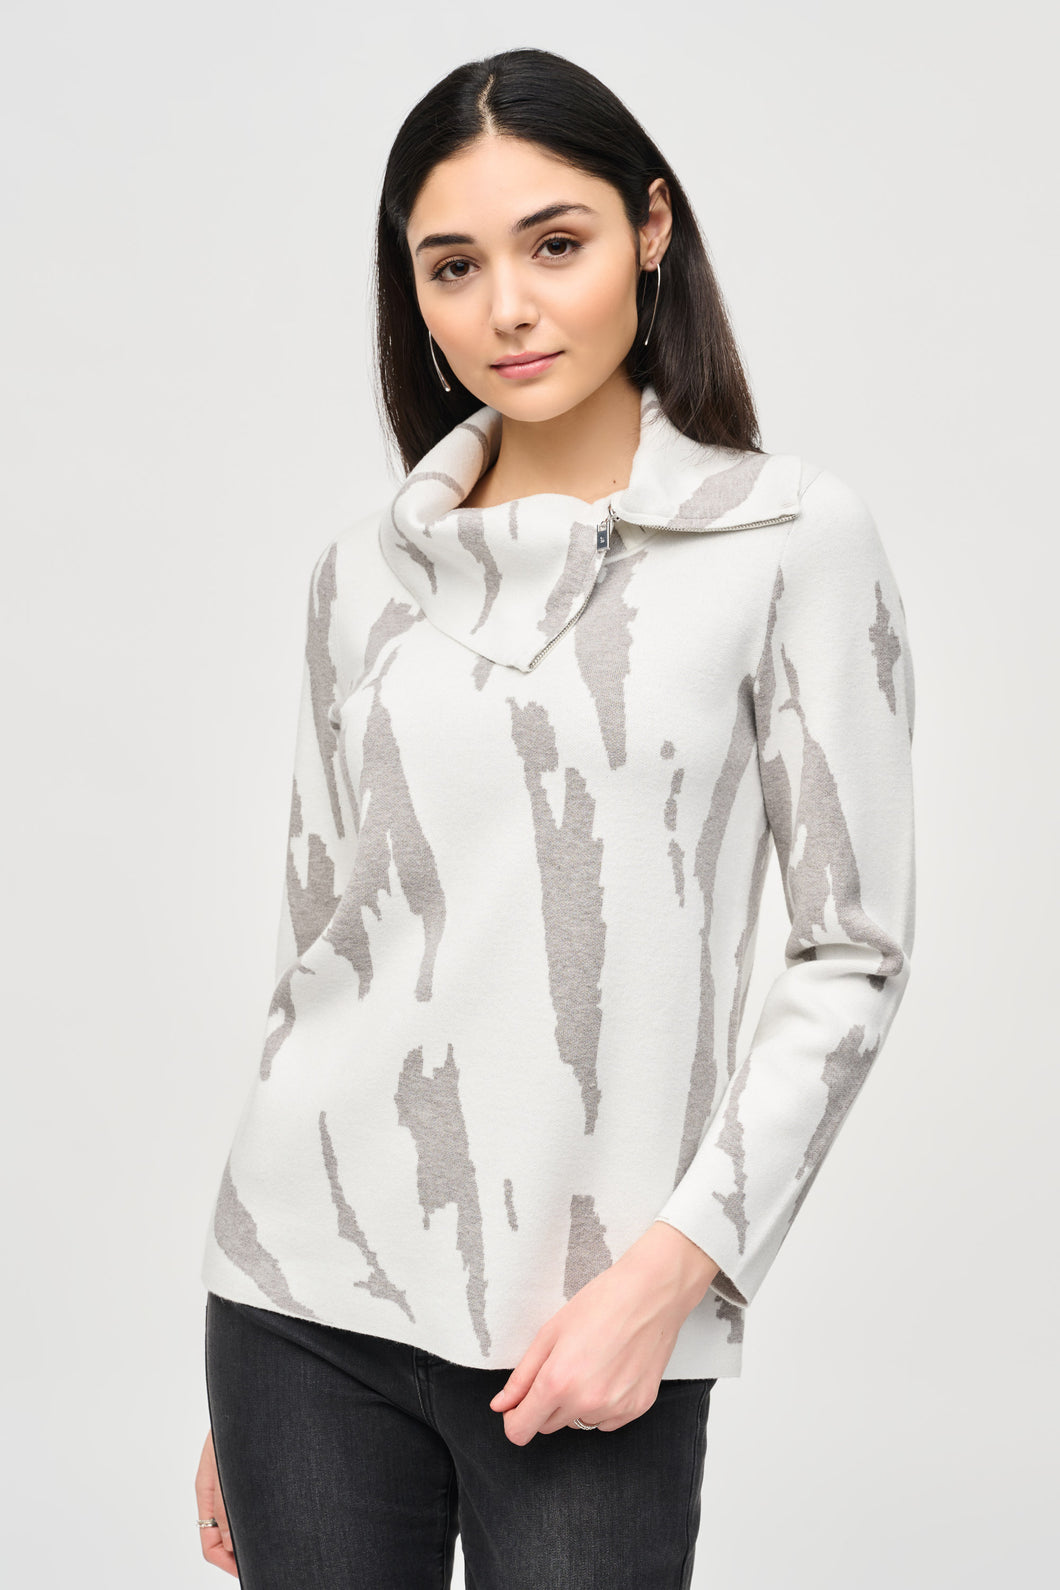 Joseph Ribkoff Vanilla Grey Melange Jacquard Sweater Knit Cowl Neck Abstract Print Top